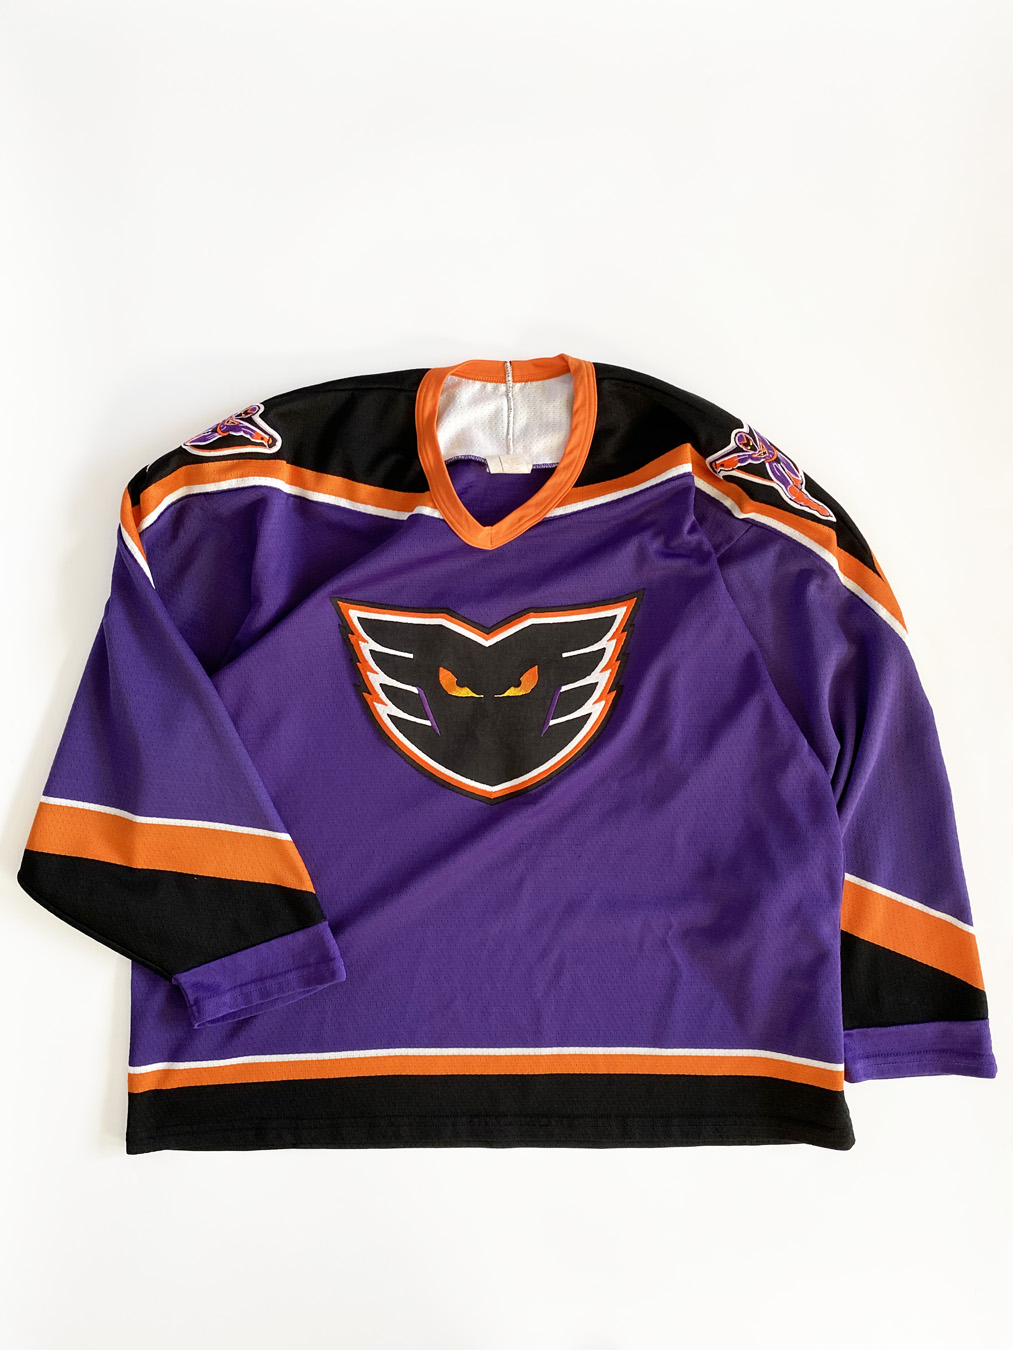 Philadelphia Adirondack Phantoms Jersey AHL purple reebok ccm